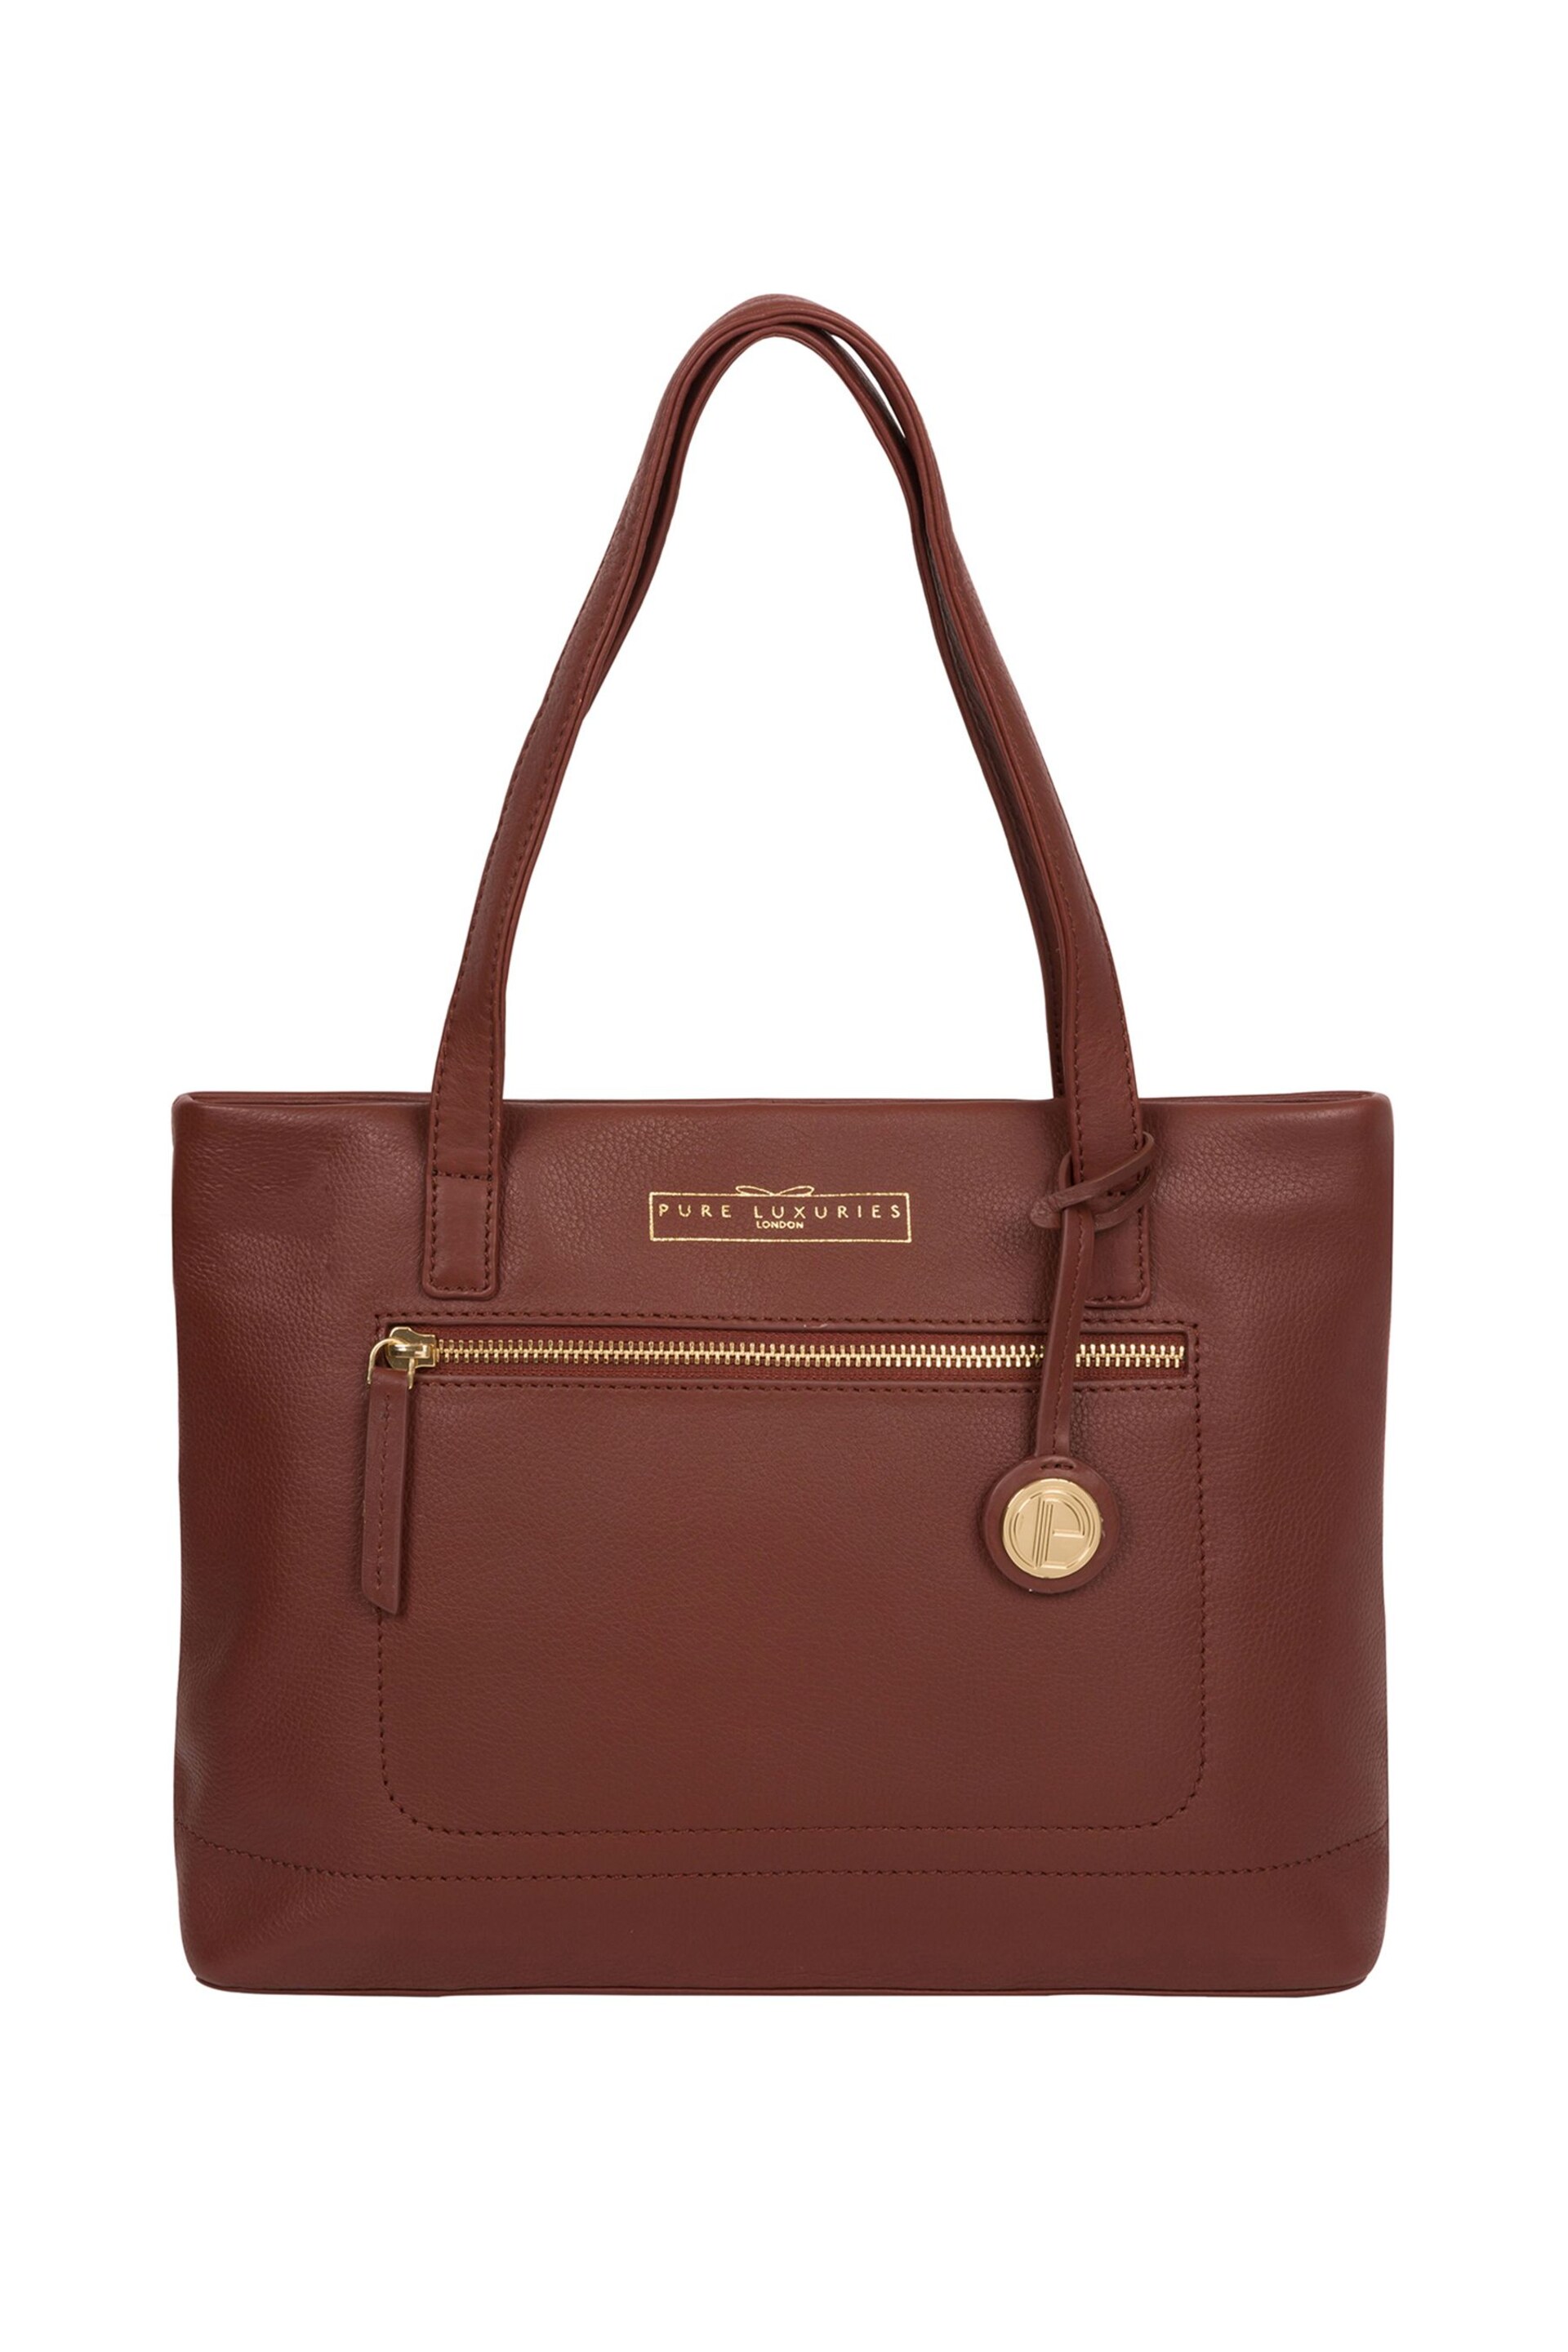 Pure Luxuries London Adley Leather Handbag - Image 2 of 7